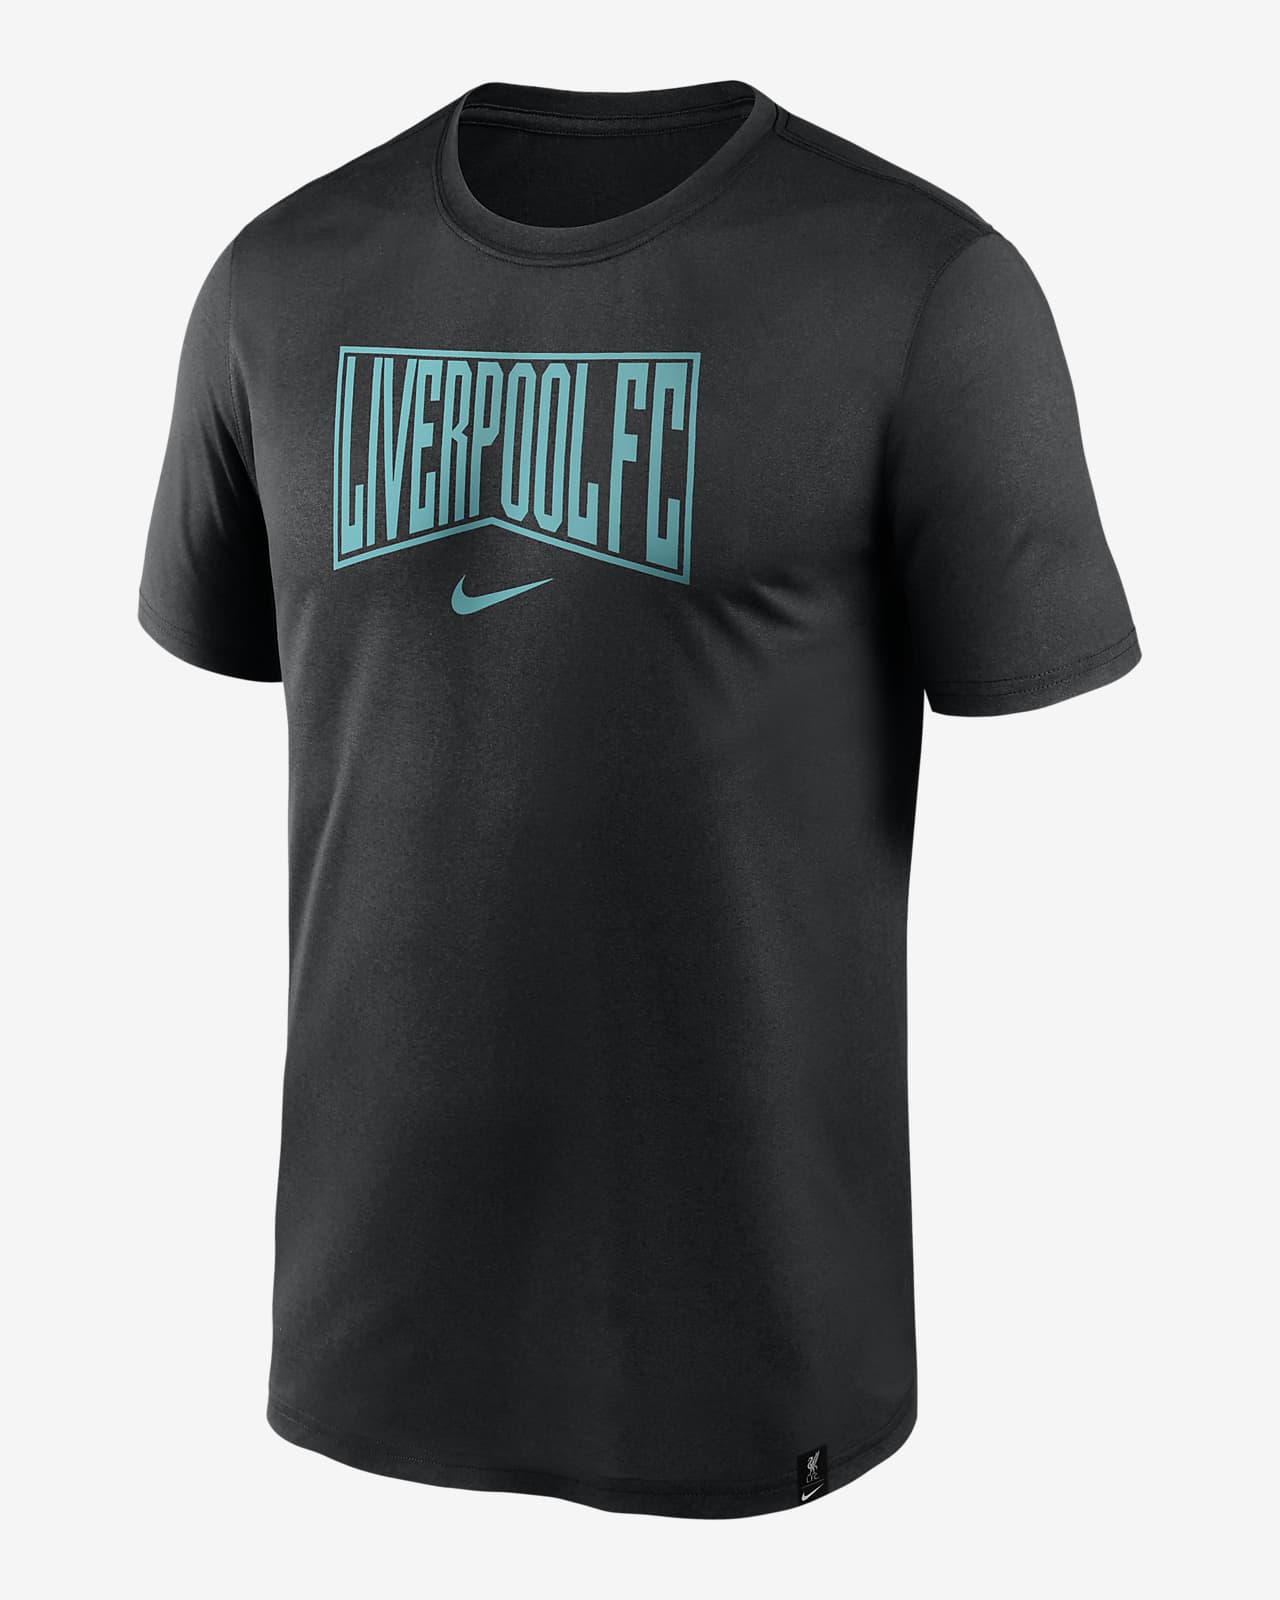 Liverpool FC Men's Nike Dri-FIT Soccer T-Shirt. Nike.com